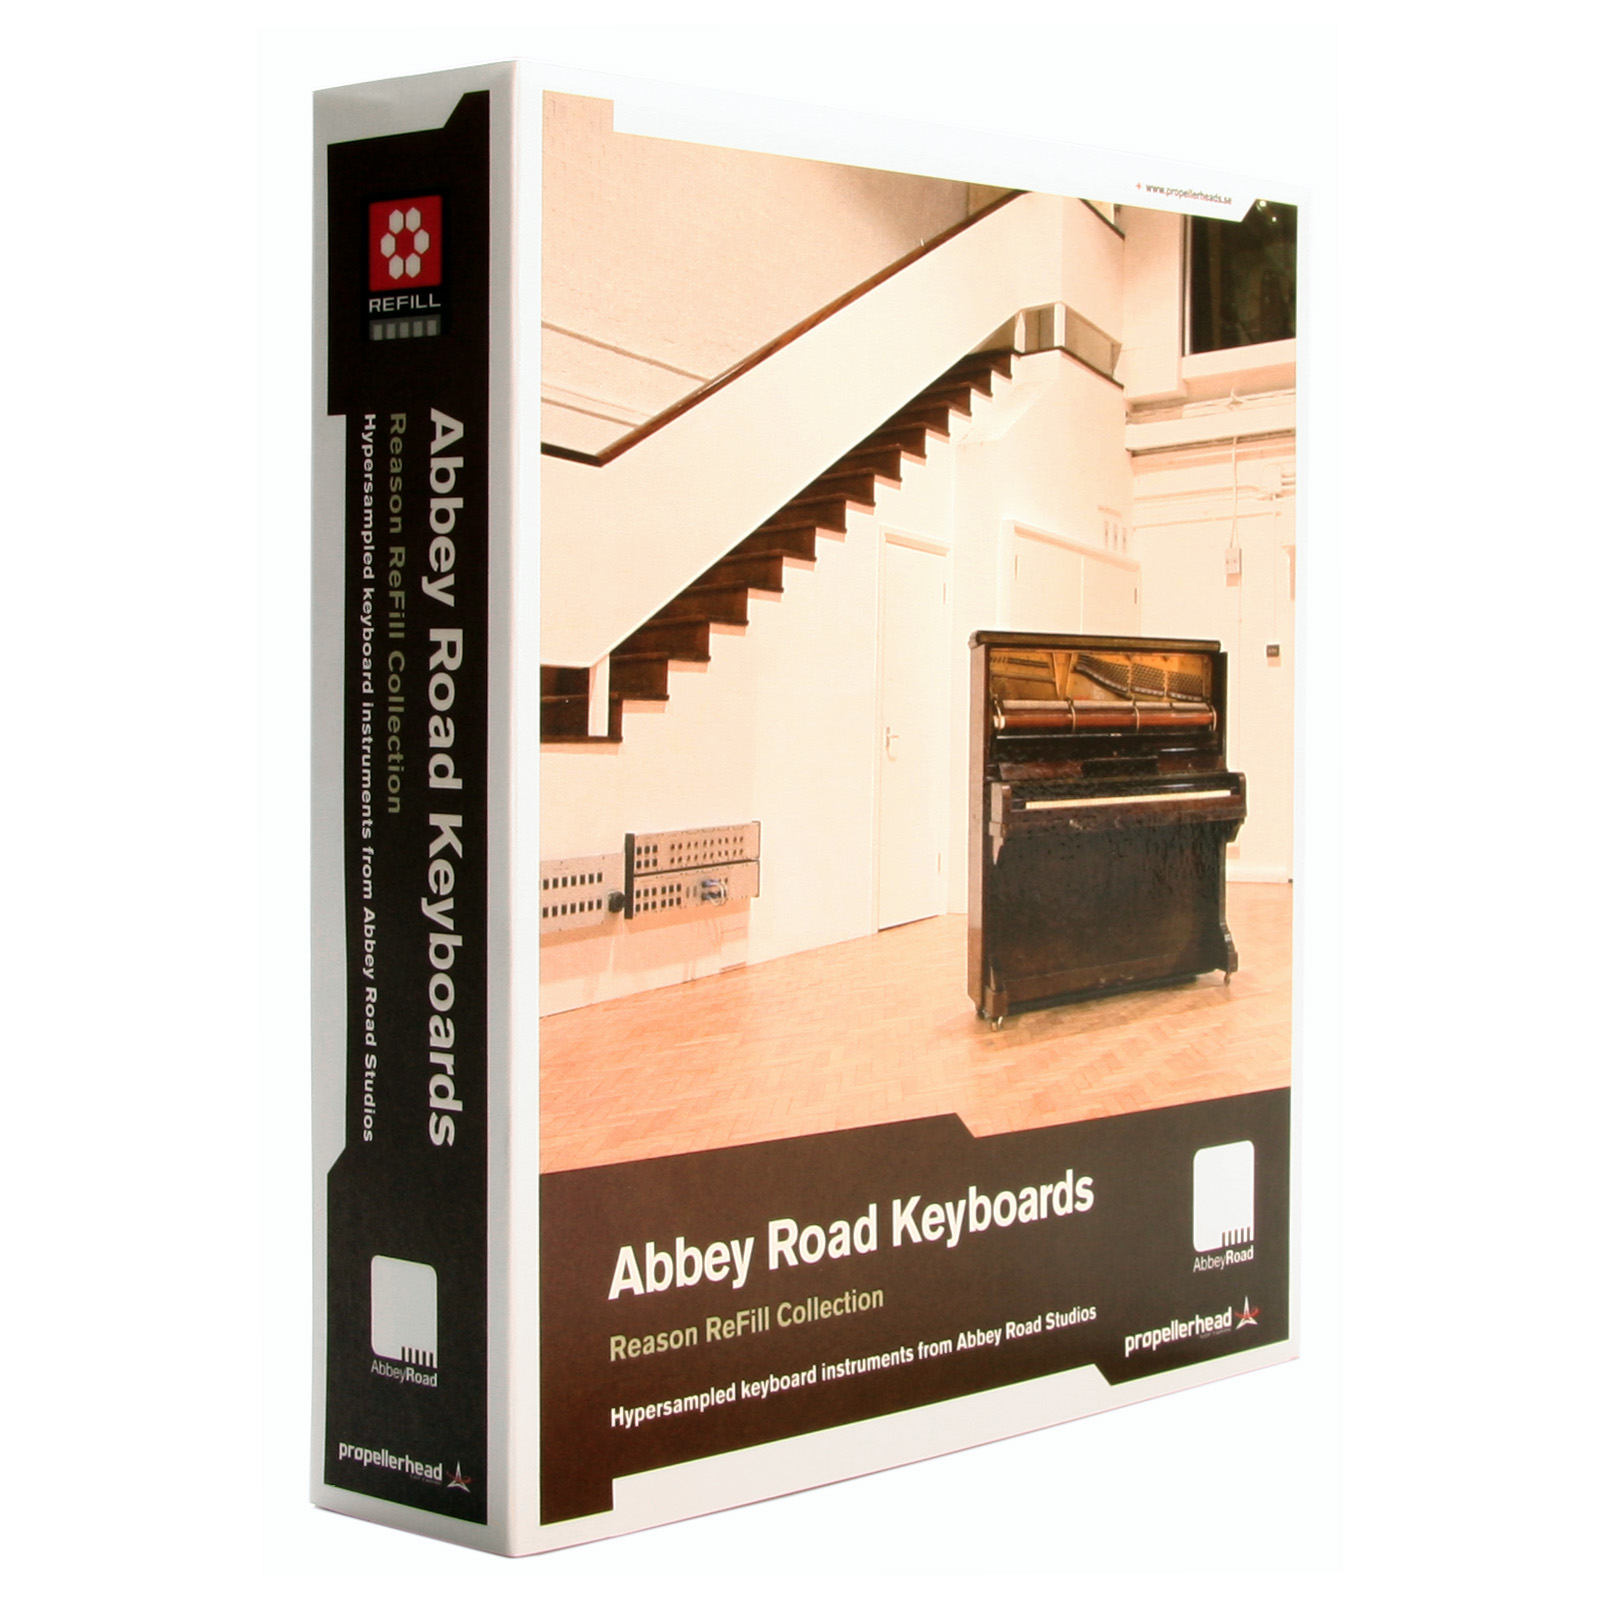 Propellerhead Propellerhead Abbey Road Keyboards ReFill Collection